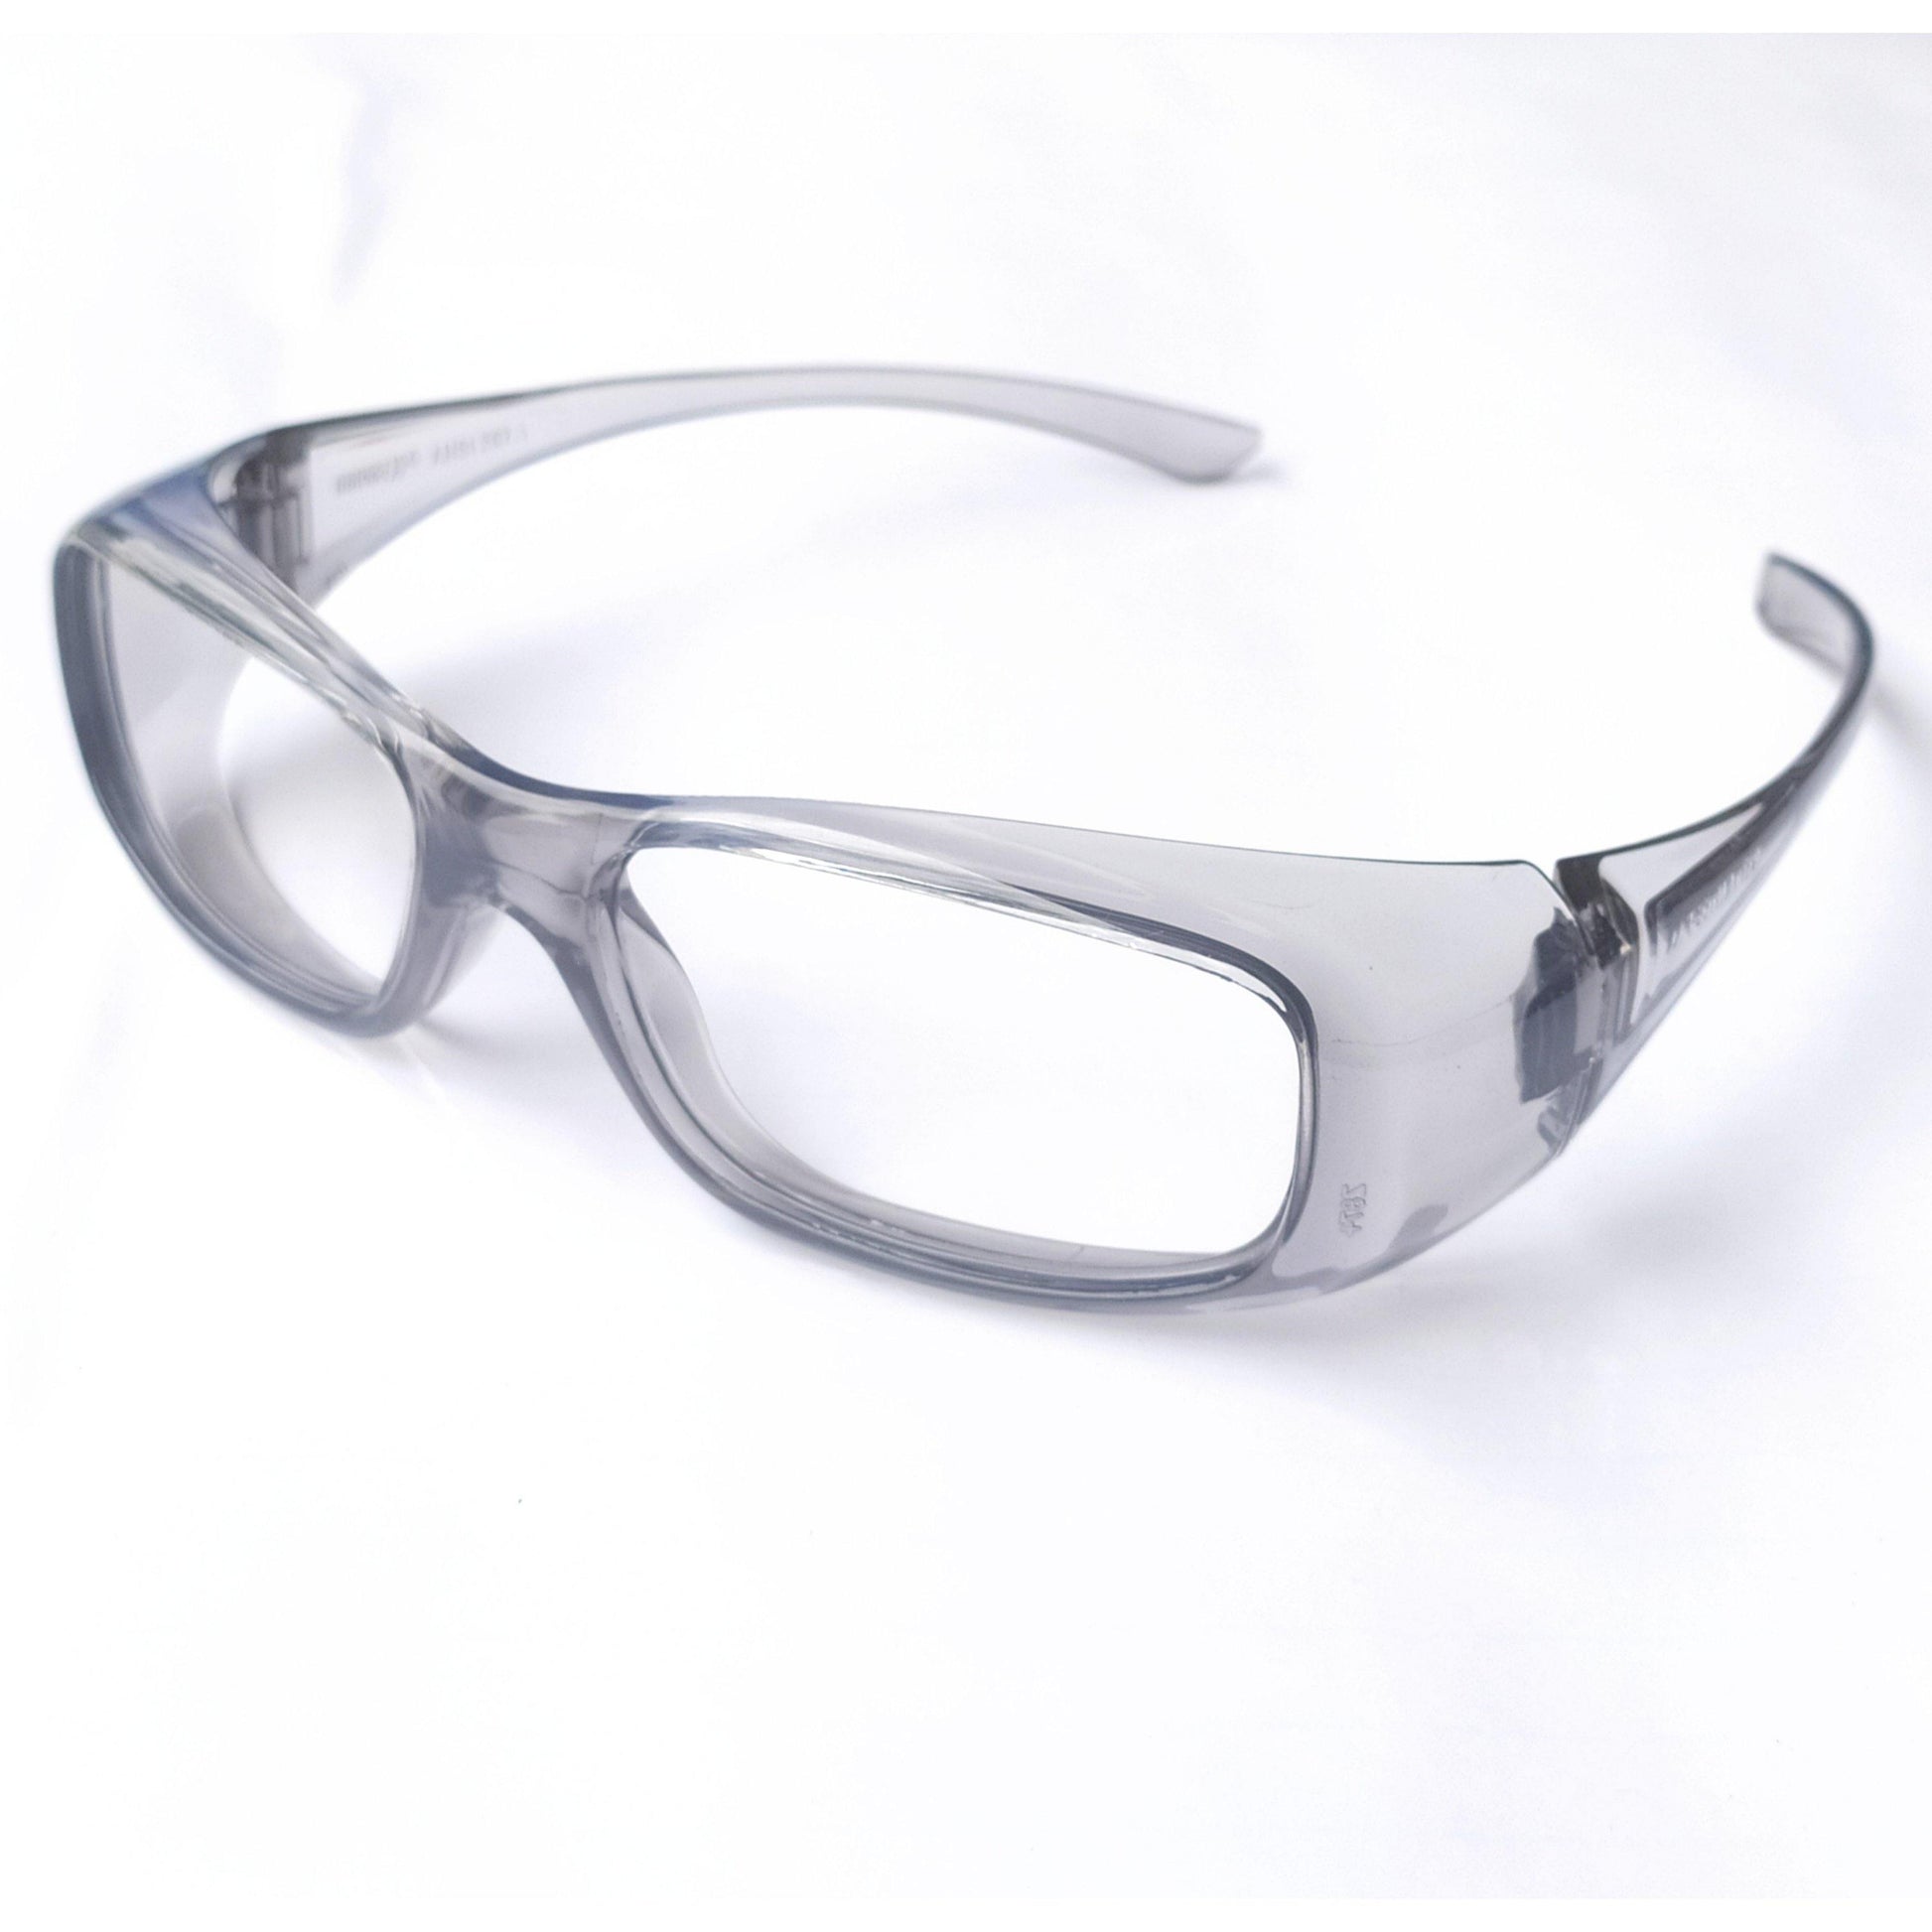 Wraparound Prescription Safety Glasses Sports 2371 - Glasses India Online